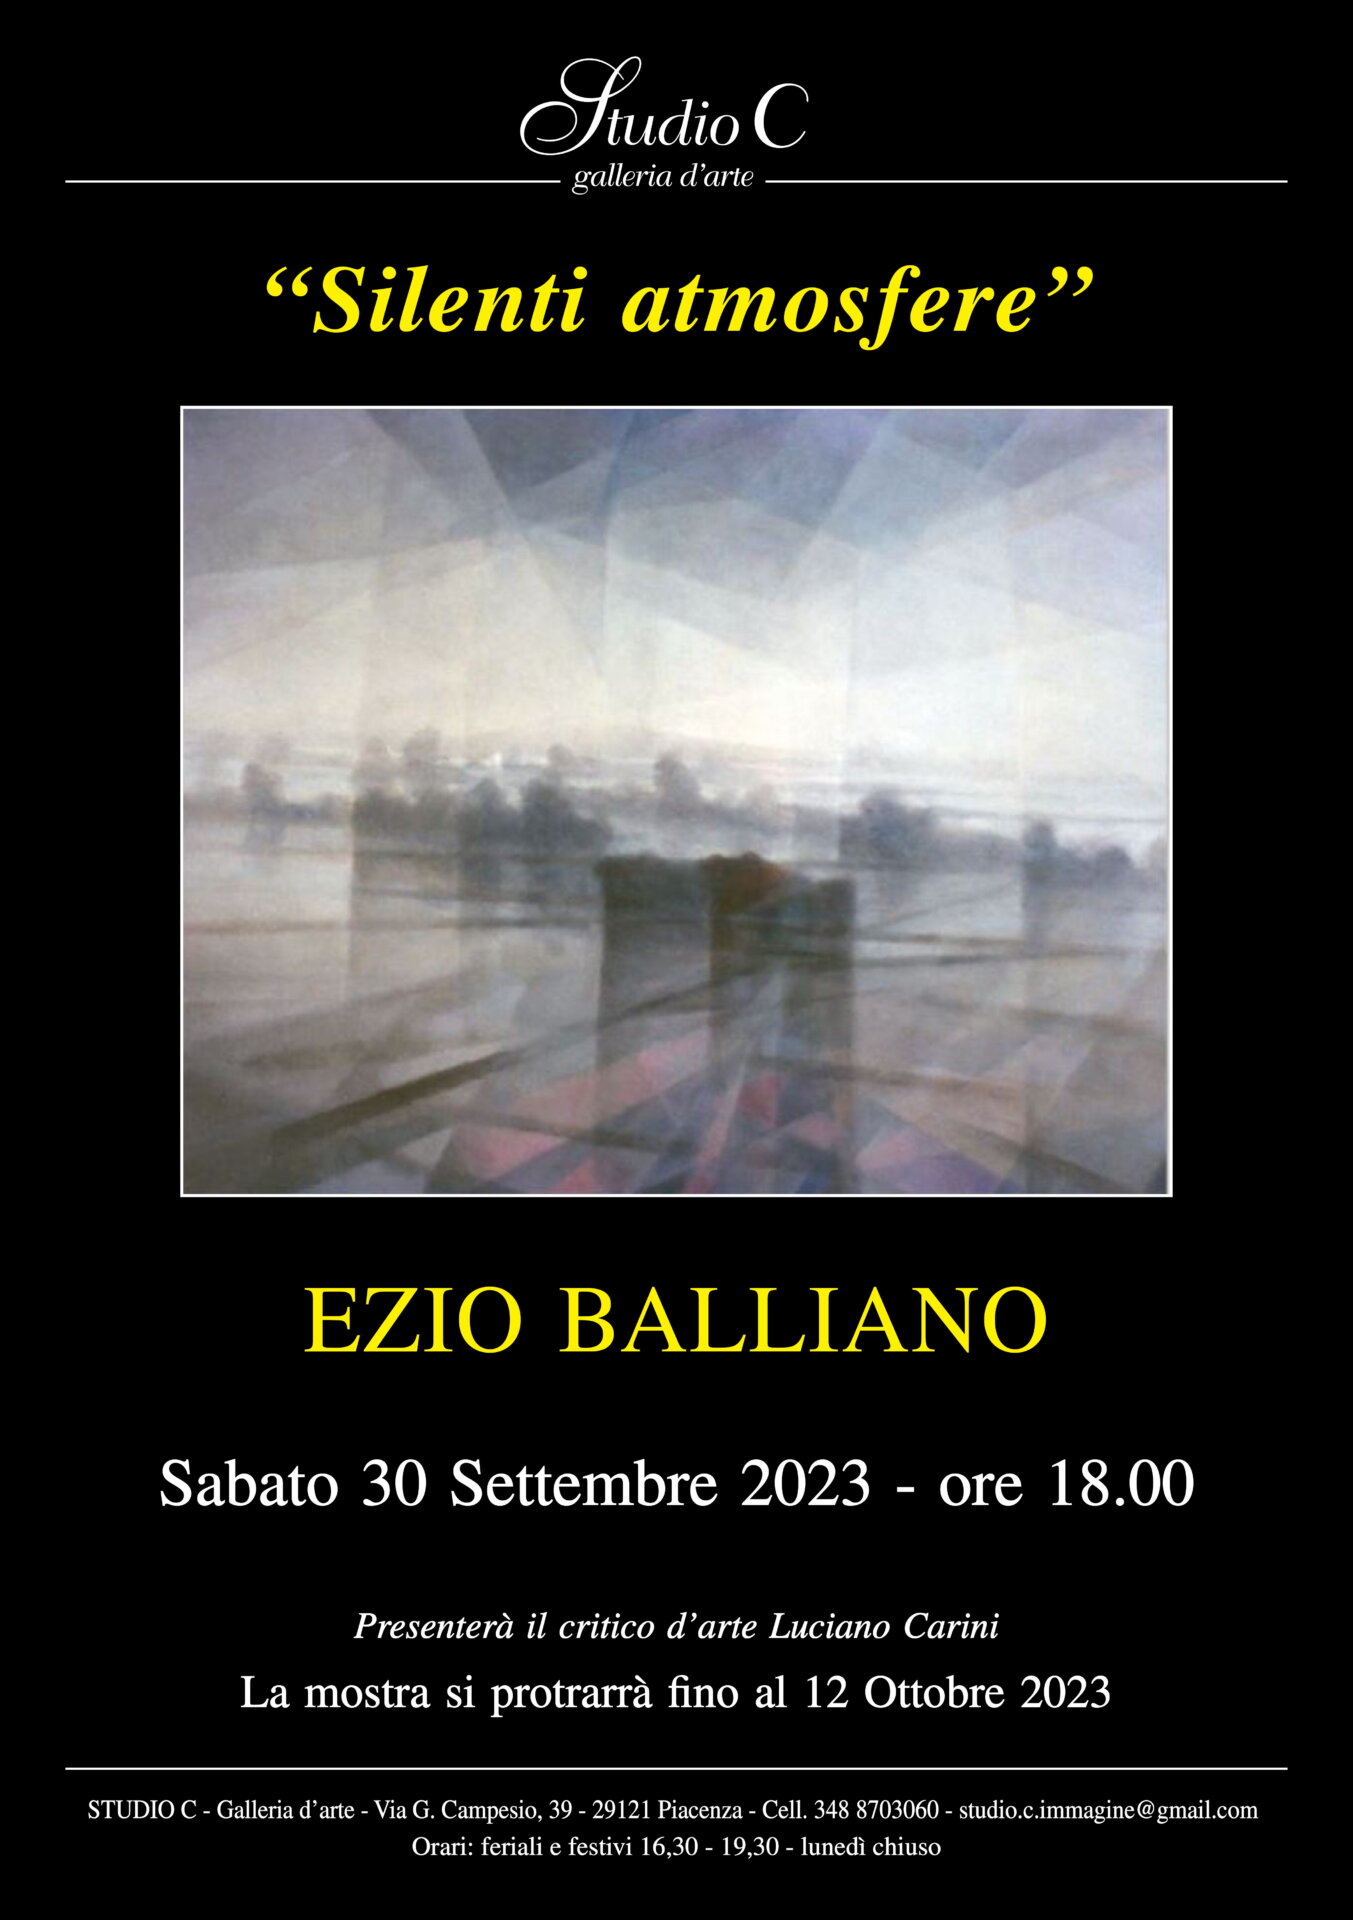 Studio C EZIO BALLIANO locandina